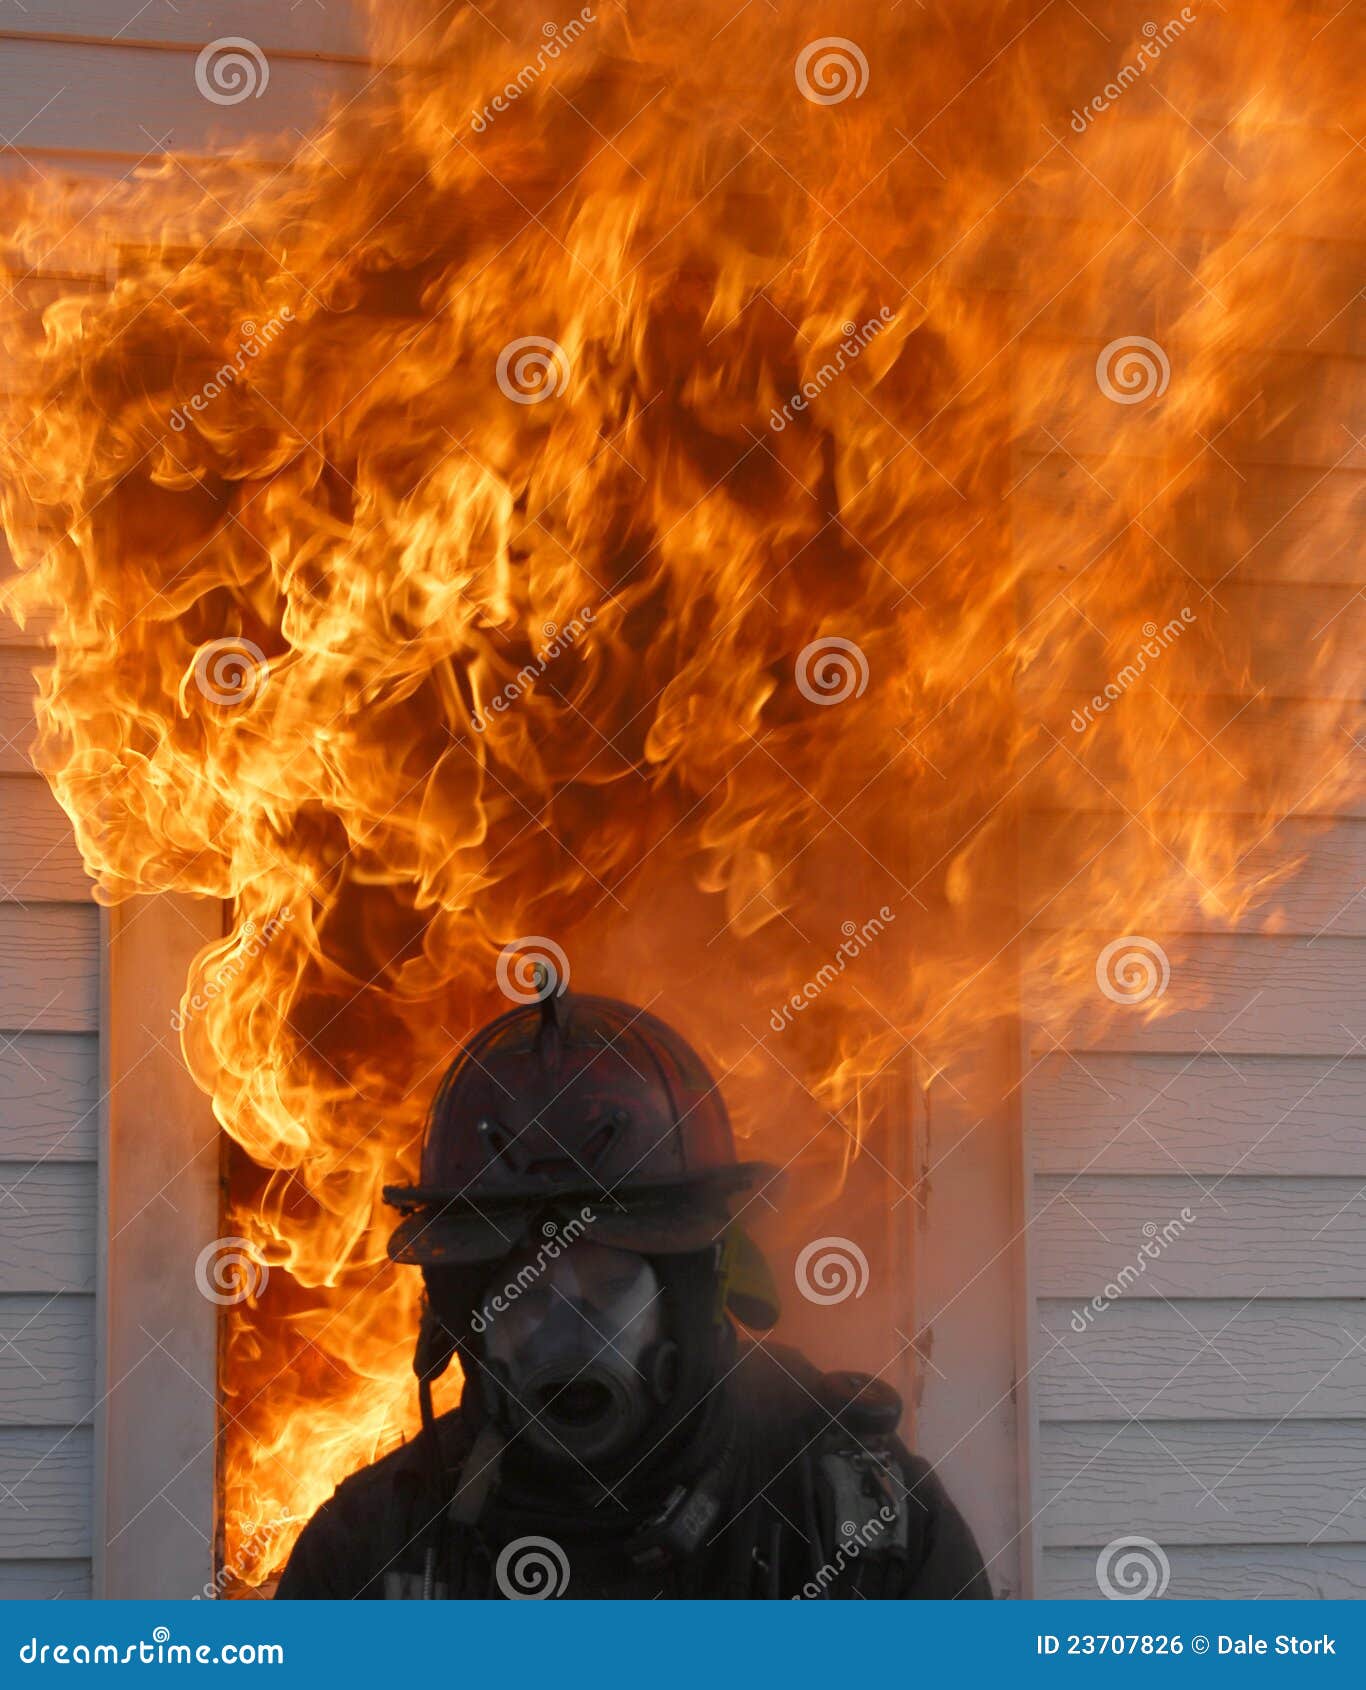 fireman in breathing apparatus